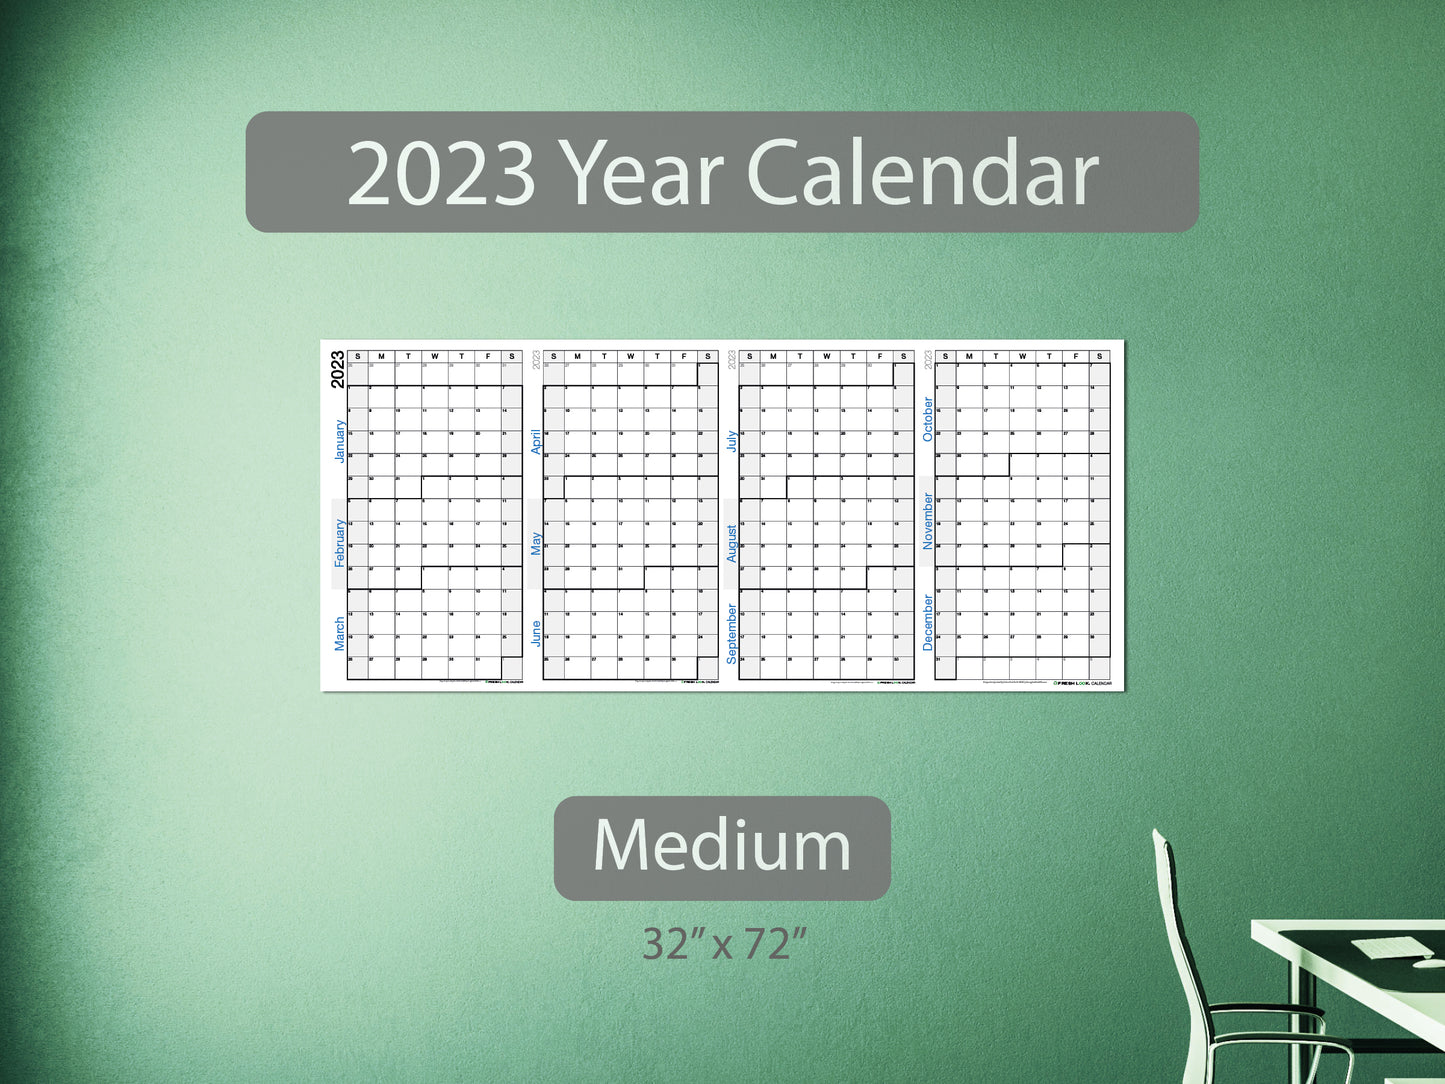 2023 Year Calendar Medium